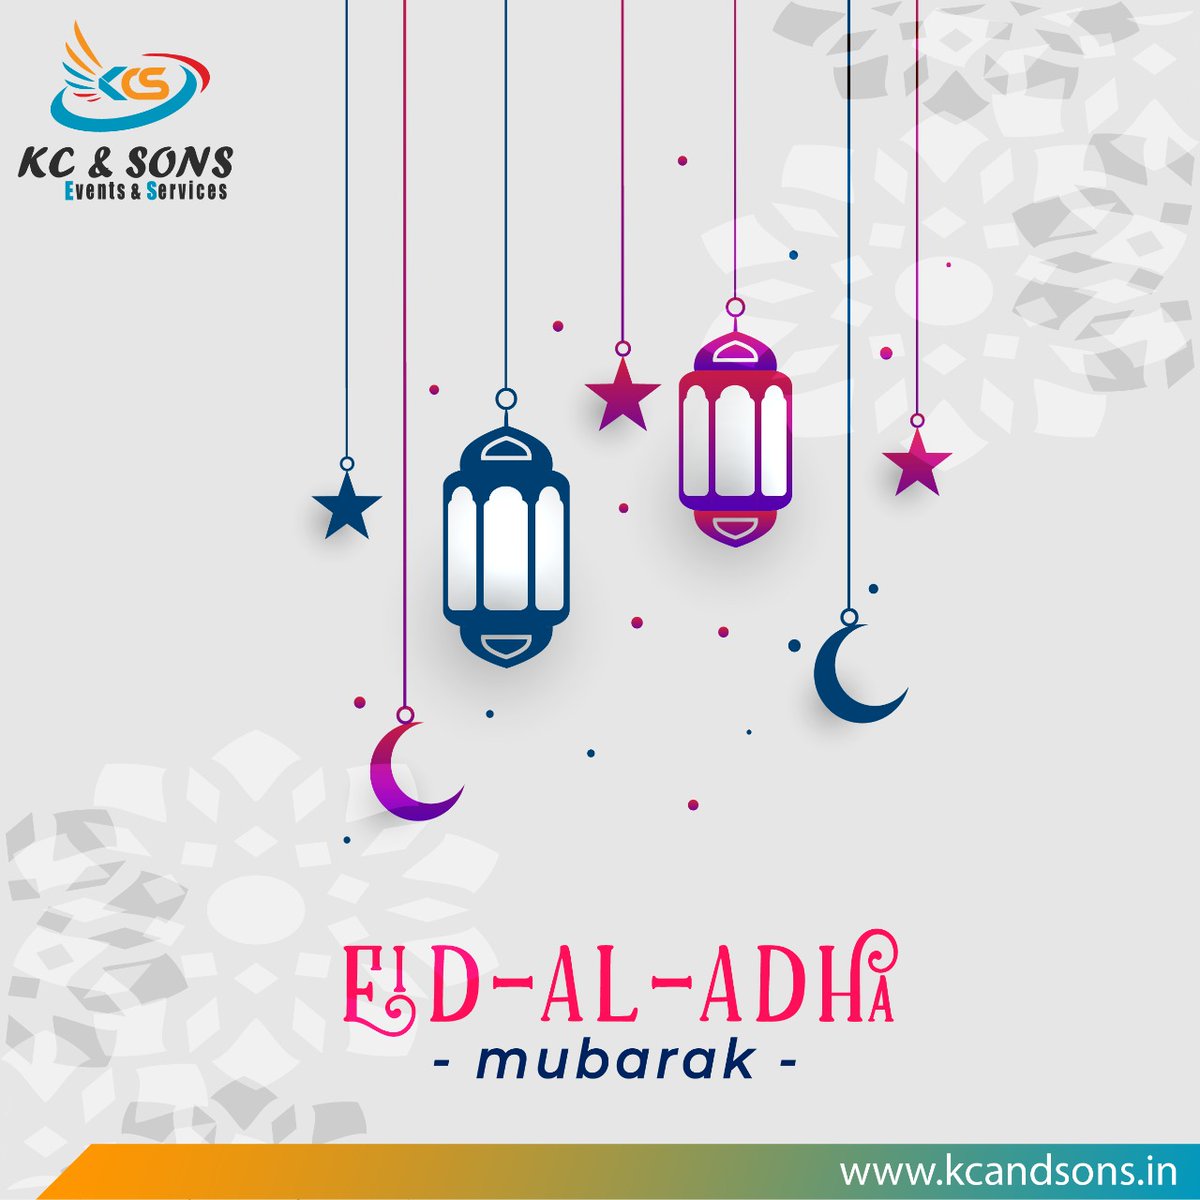 May Allah accept our good deeds and abstain us from the wrongs! 
Mubarak Eid-AI-Adha to everyone.

🌎 kcandsons.in 🌎
#HappyEid #EidAlAdha #EidUlIAdha #arafah #eid_mubarak #hajj #happy_eid #holyquran #muslimgift #muslimillustrator #Events #KcAndSons